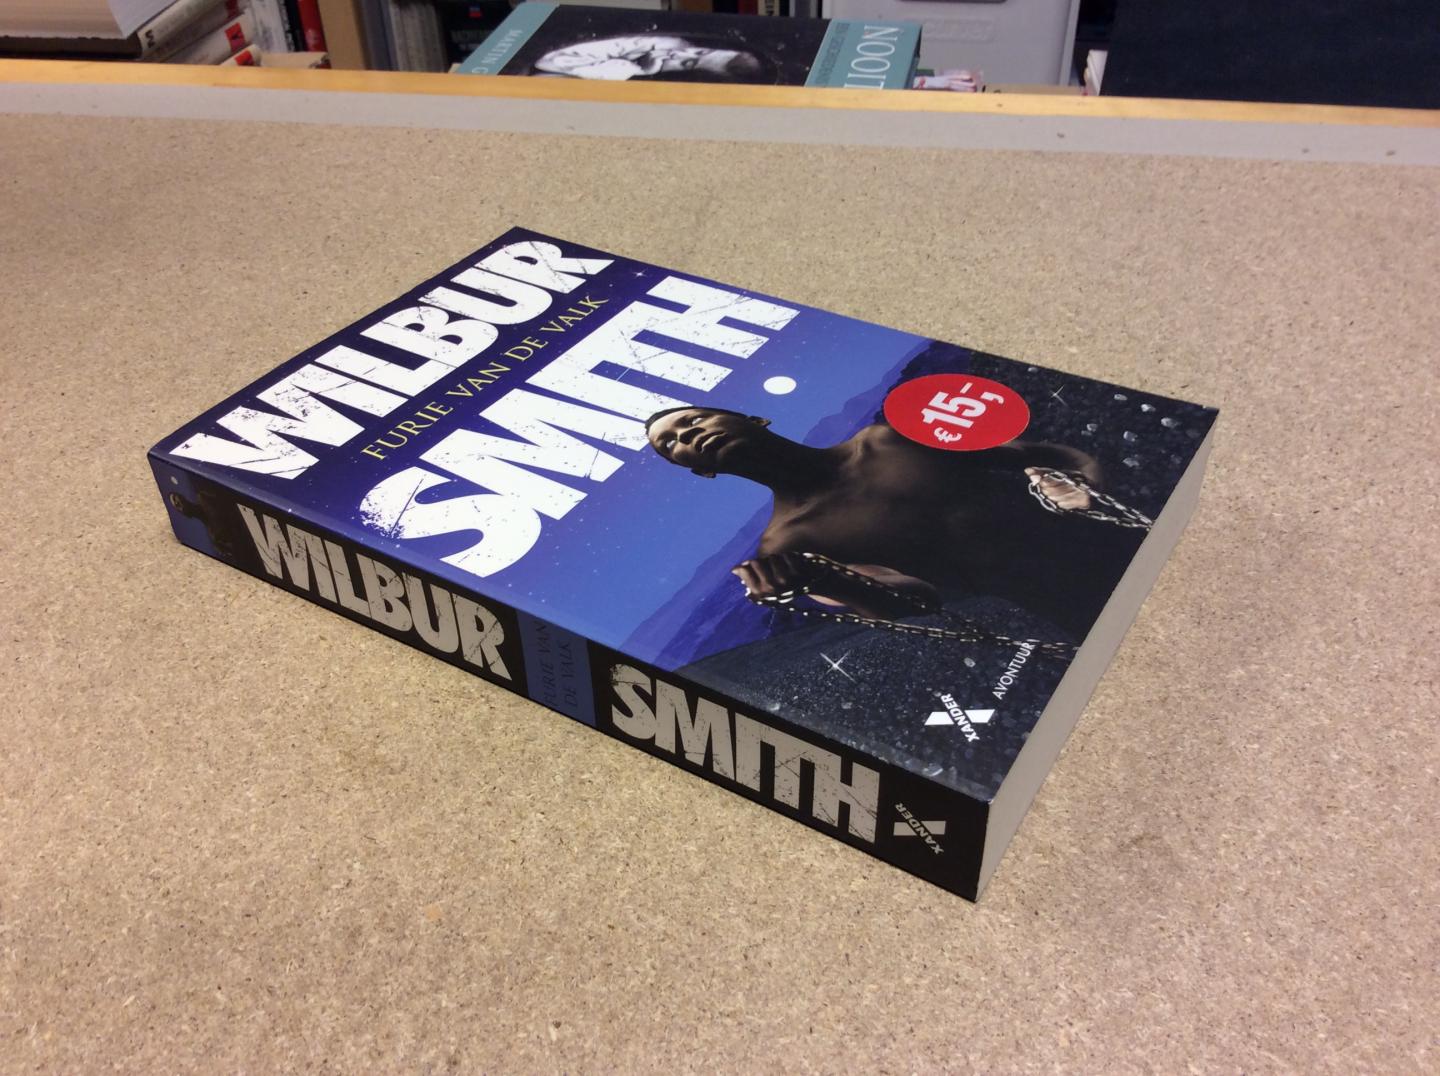 Smith, Wilbur - De furie van de valk